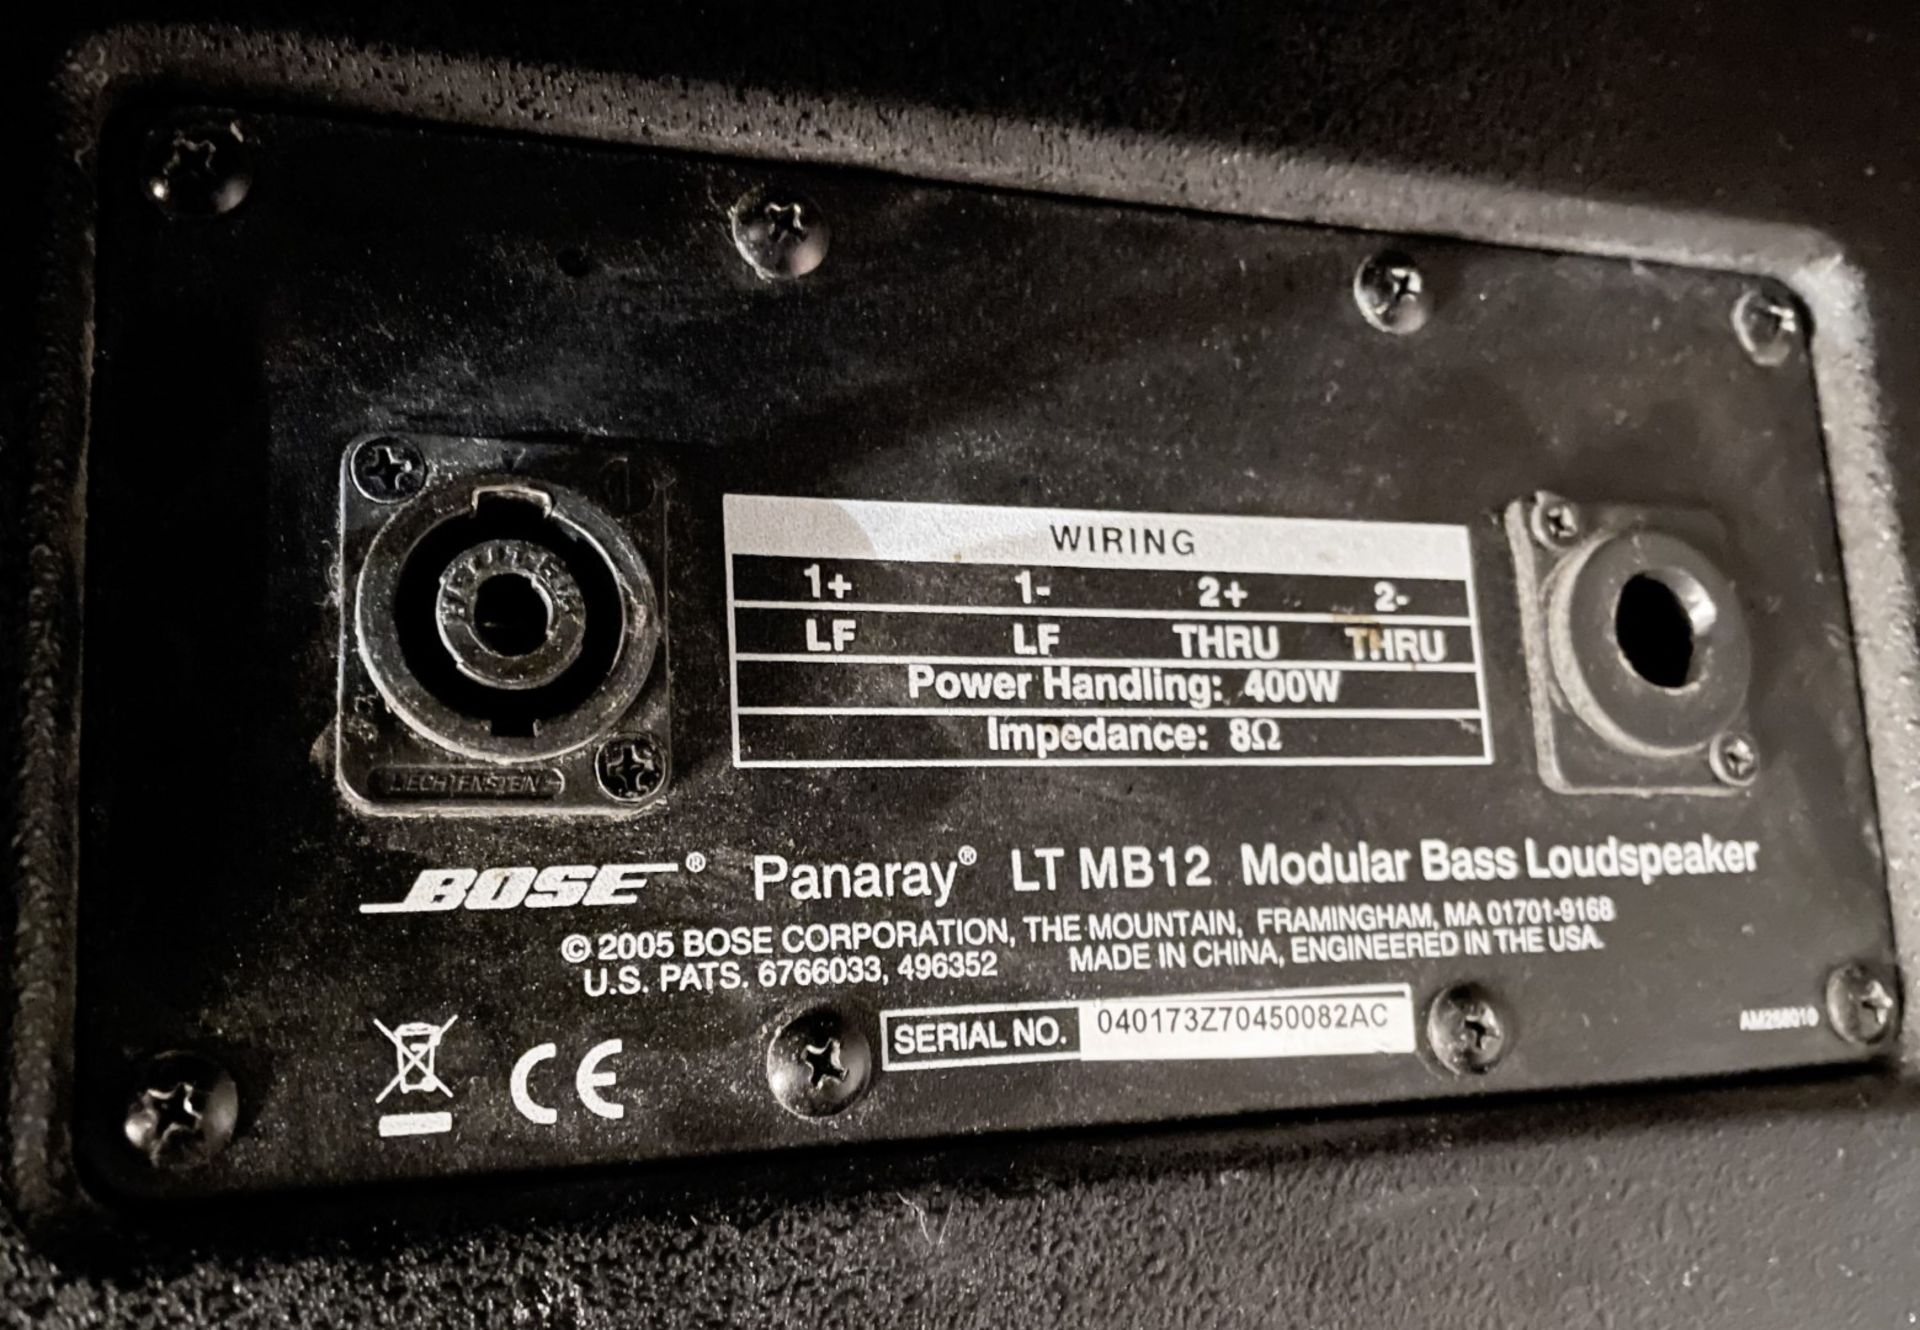 1 x Bose Panaray LTMB12 Modular Bass Loudspeaker - Image 4 of 4